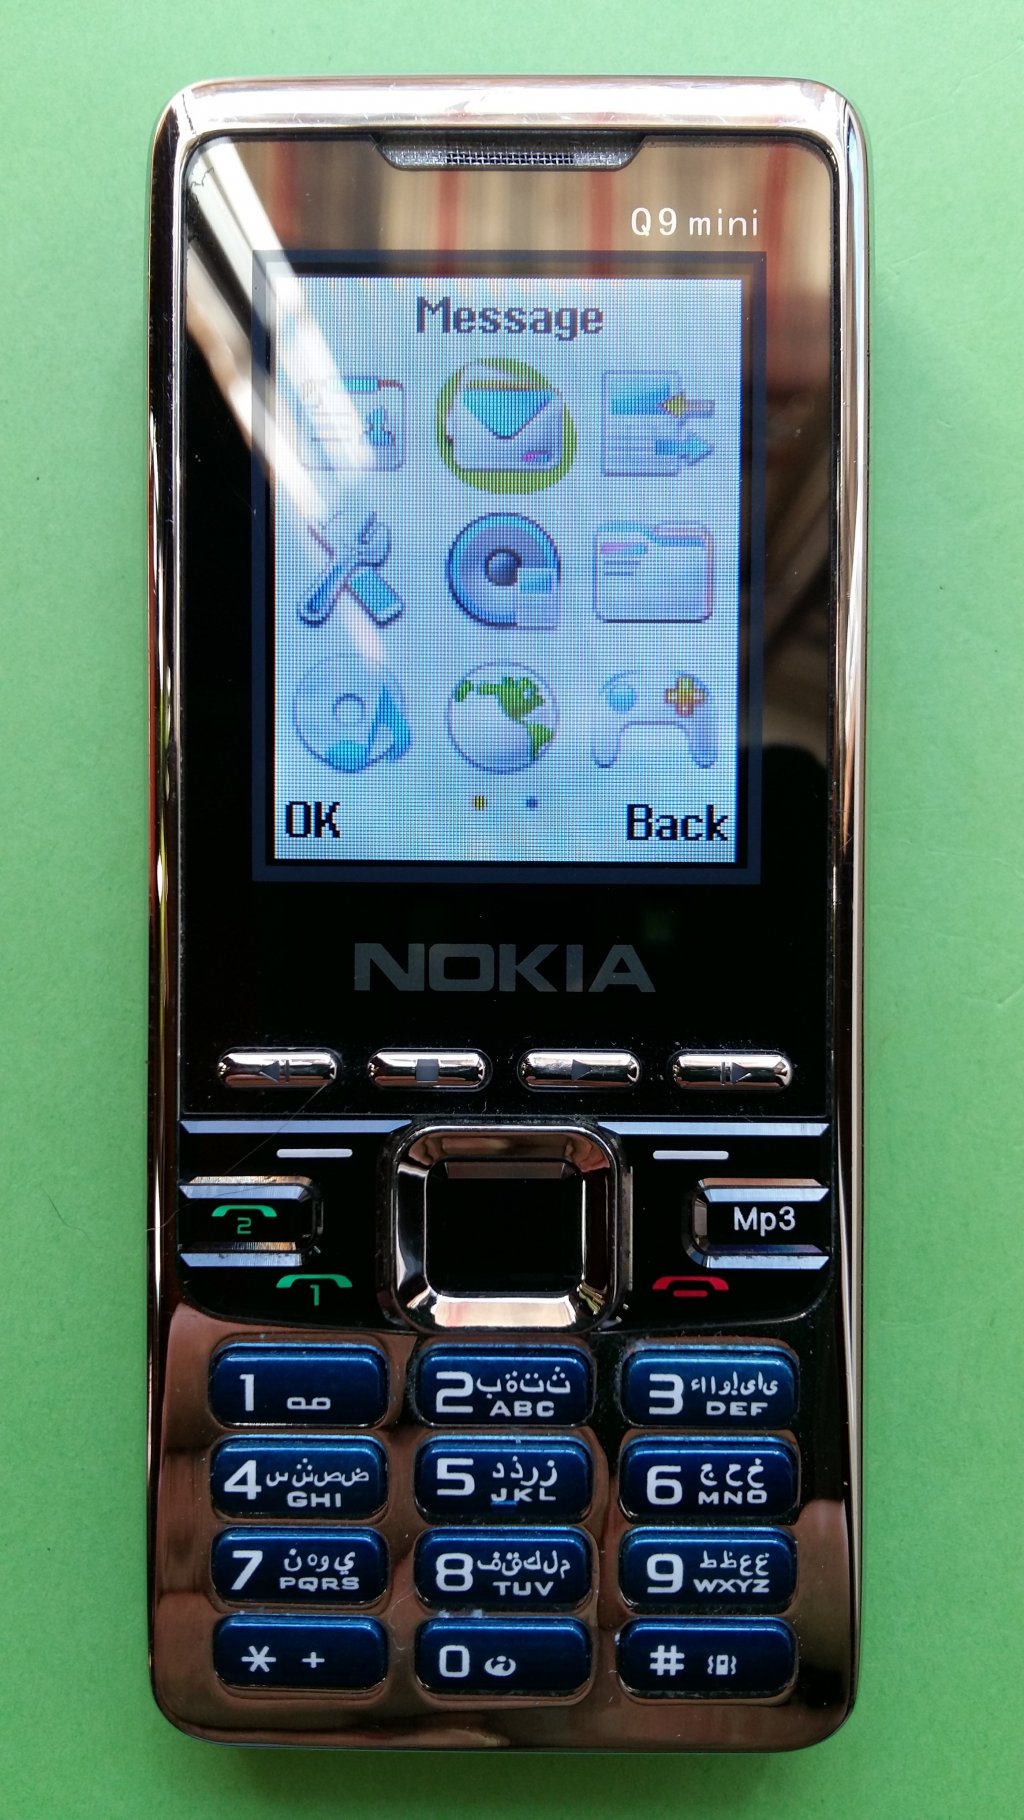 image-9970976-Nokia_Q9_(1)1-d3d94.w640.jpg